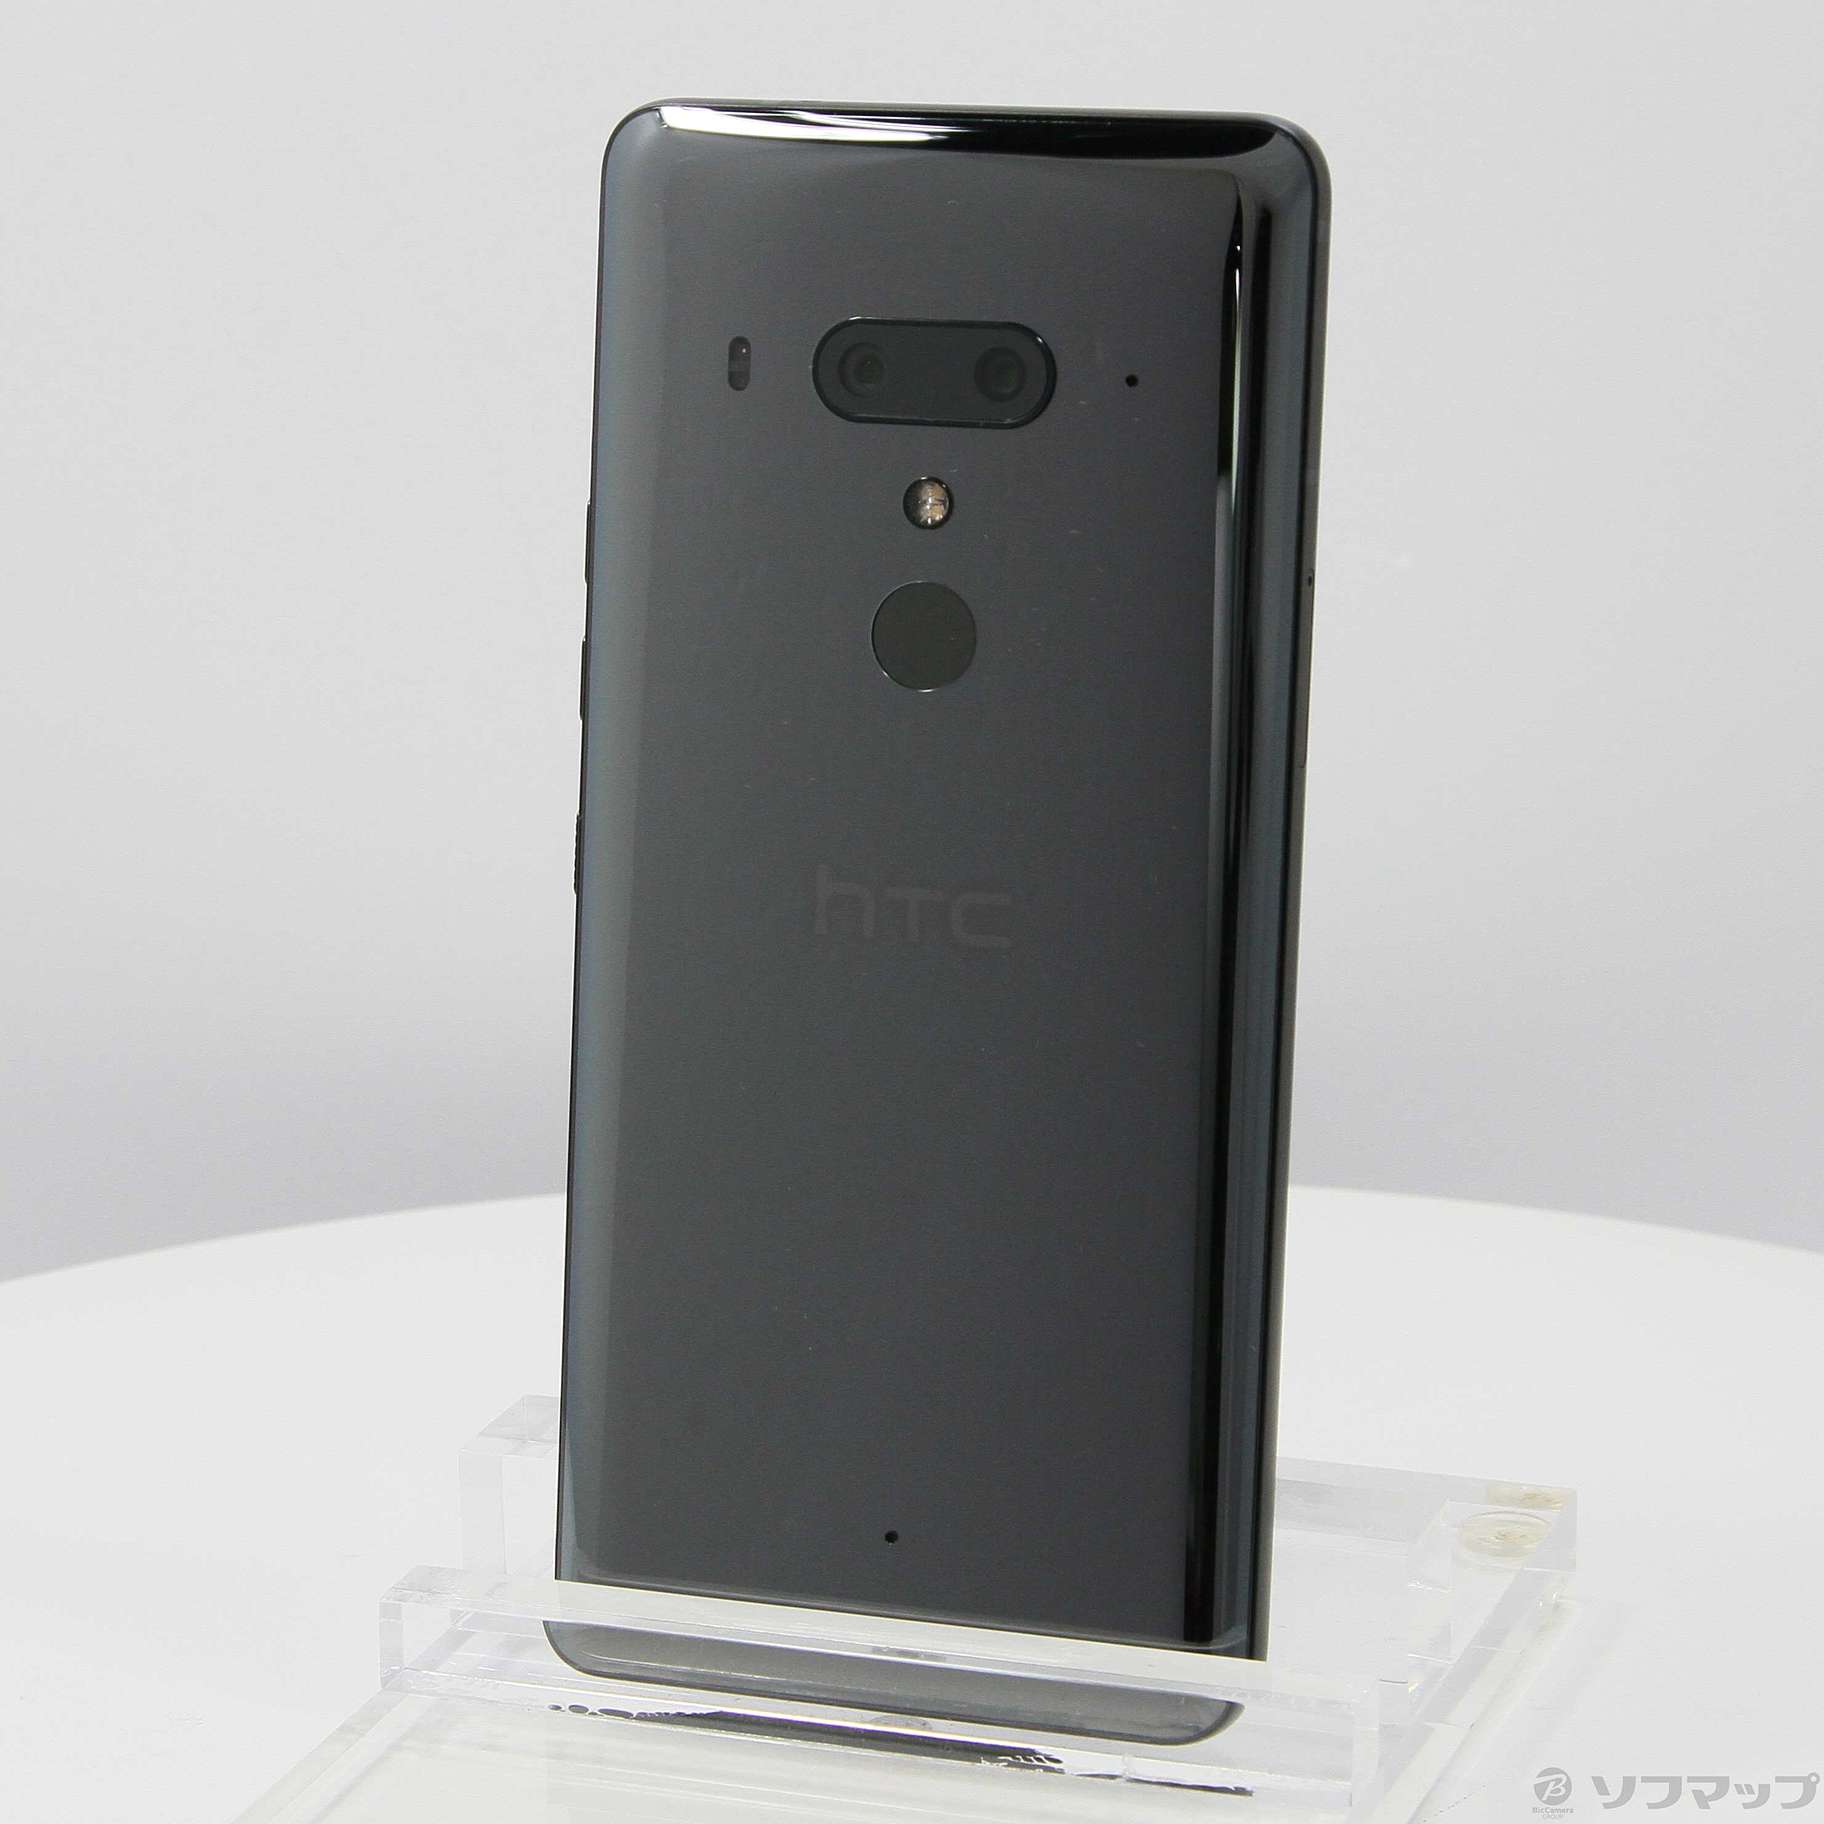 HTC U12+ セラミックブラック www.krzysztofbialy.com